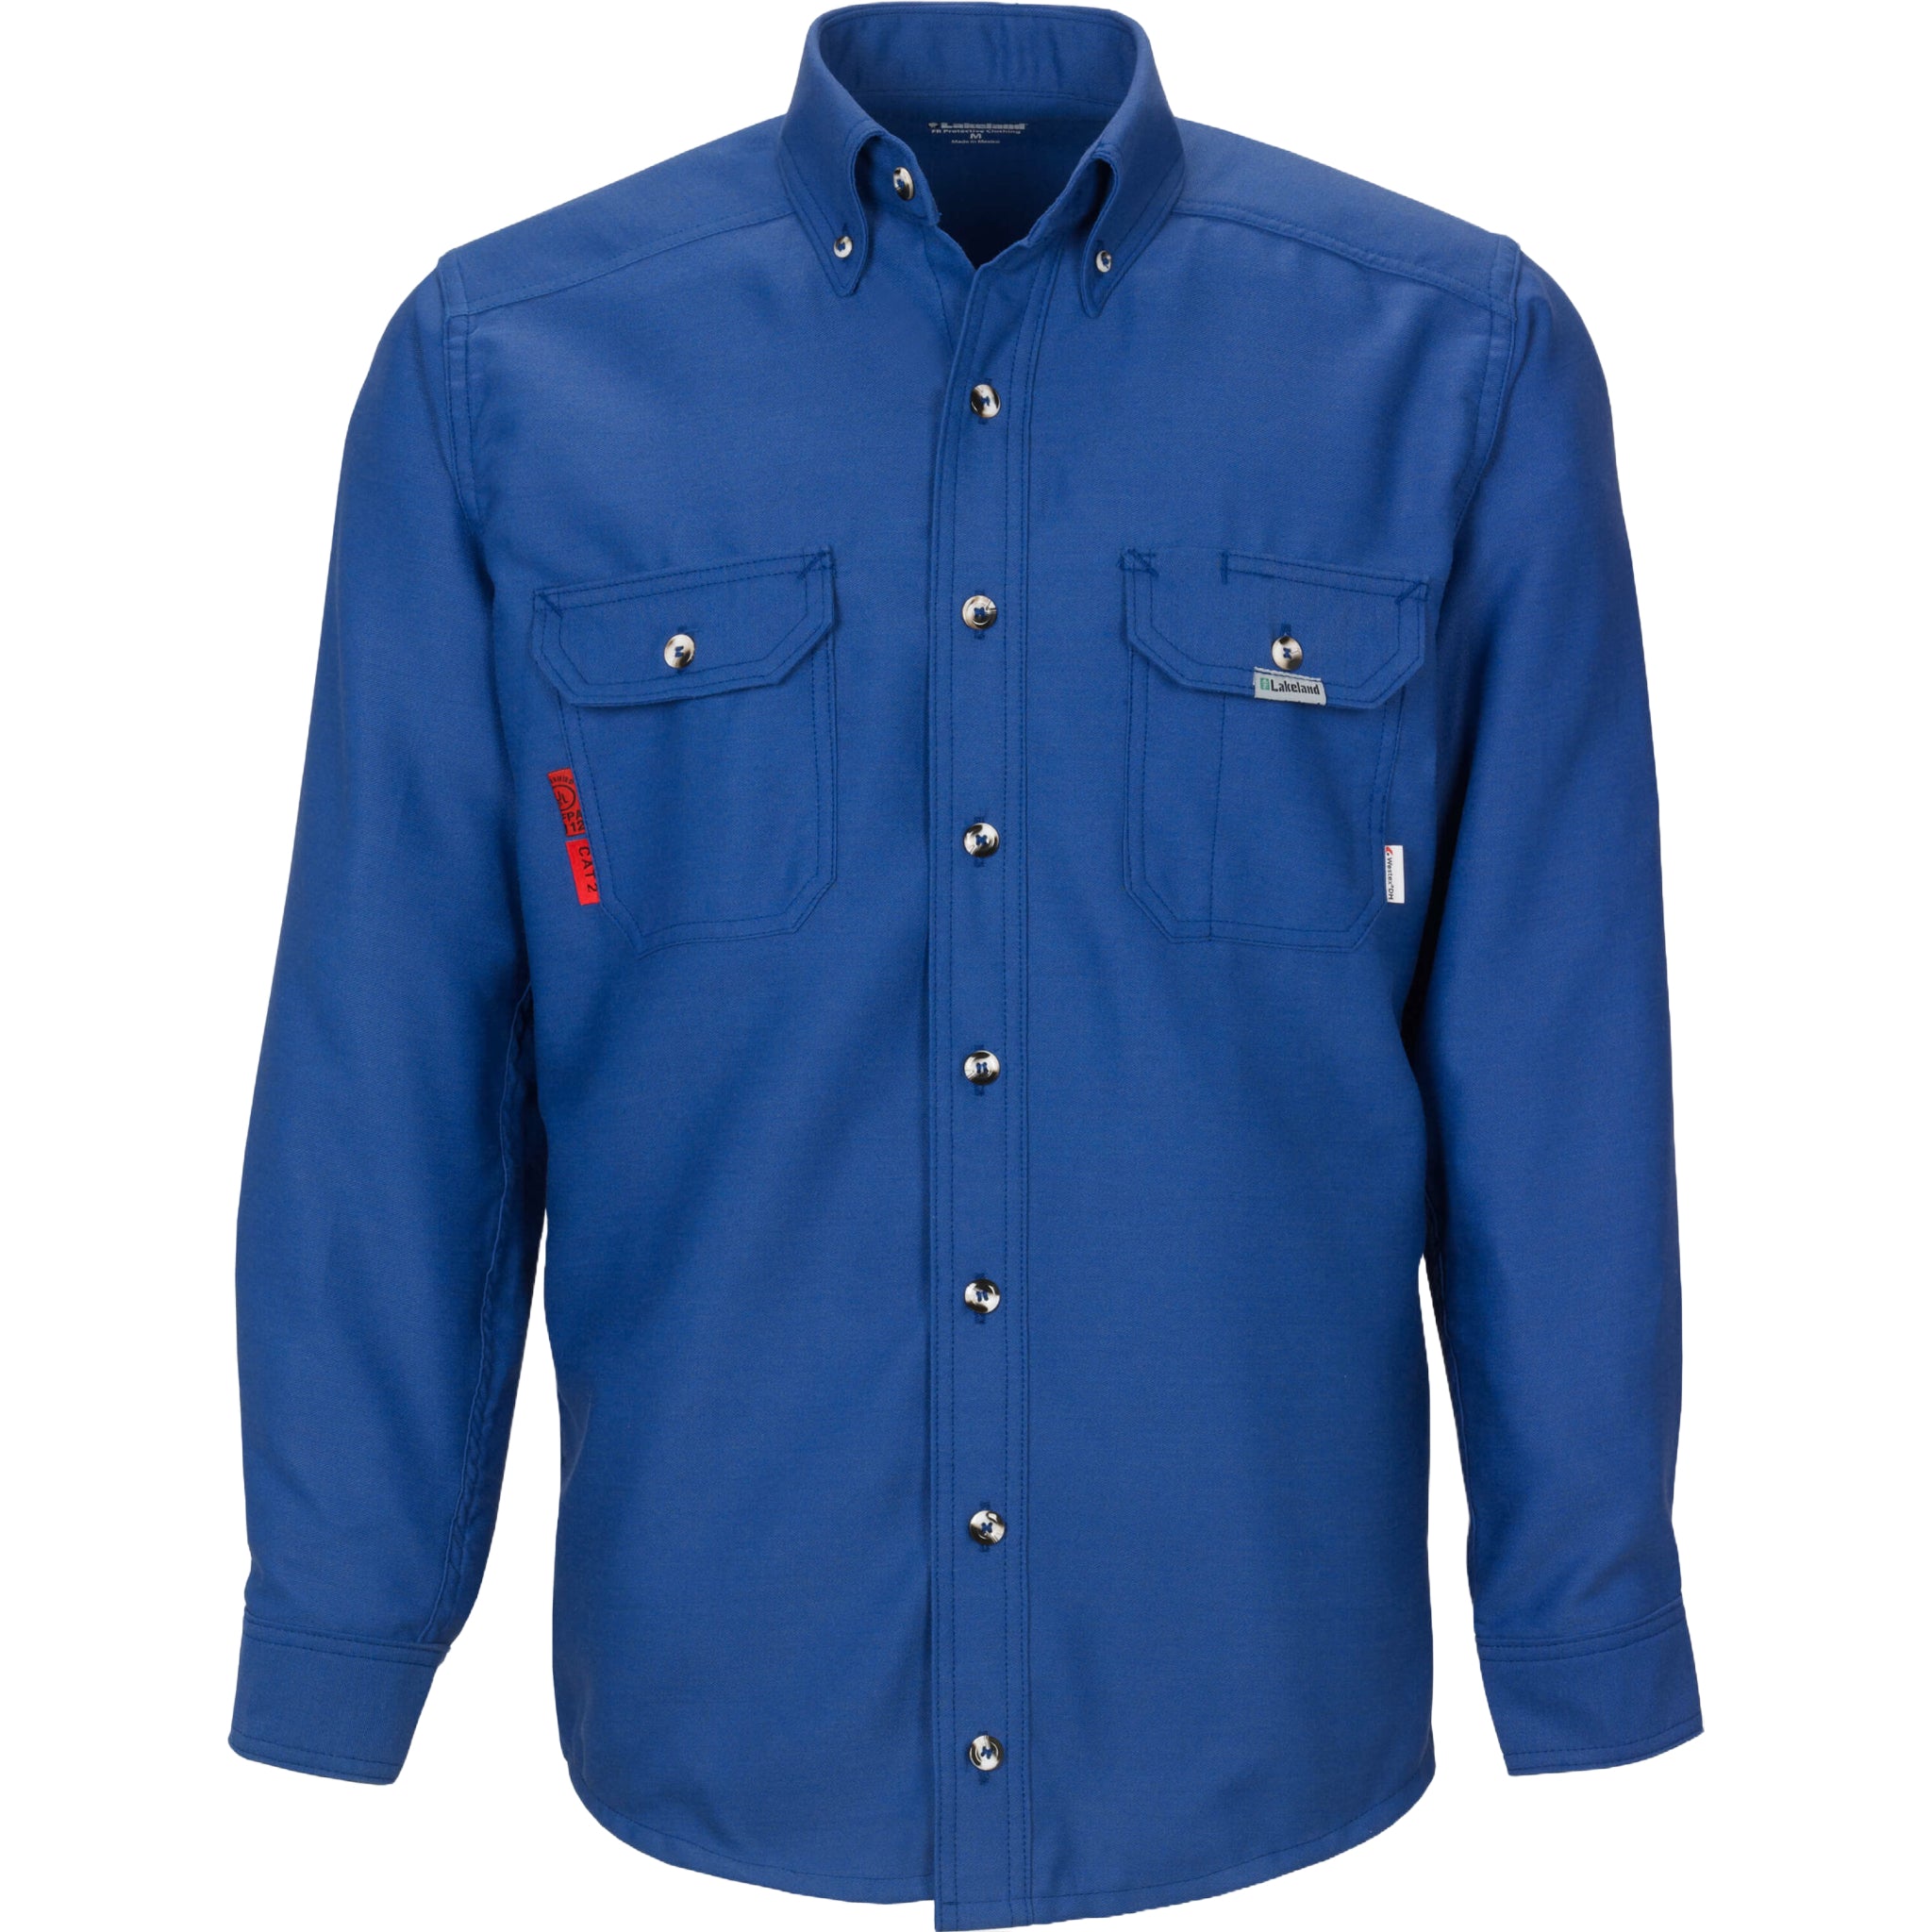 LAKELAND ISH65DH18 FR Westex DH 6.5 Oz. Shirt, Royal Blue, 1 Each